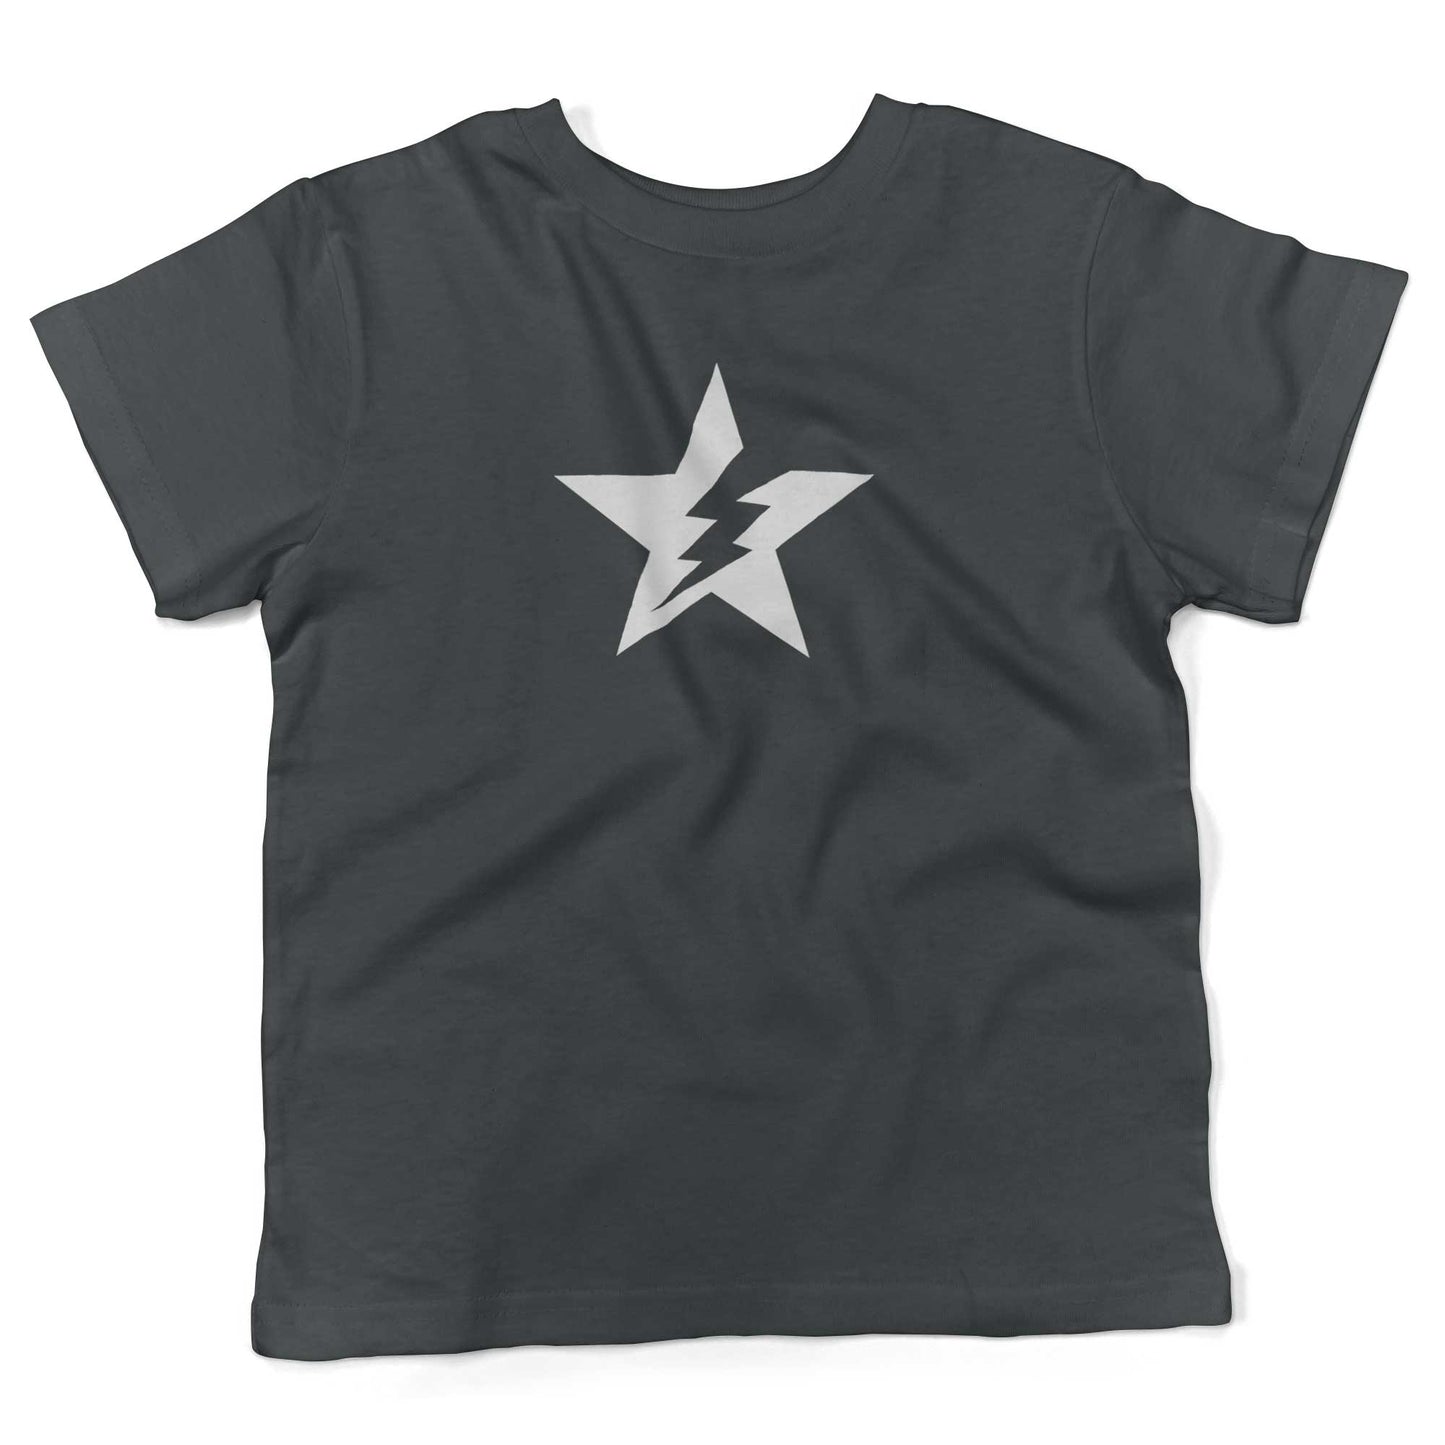 Star Bolt Toddler Shirt-Asphalt-2T